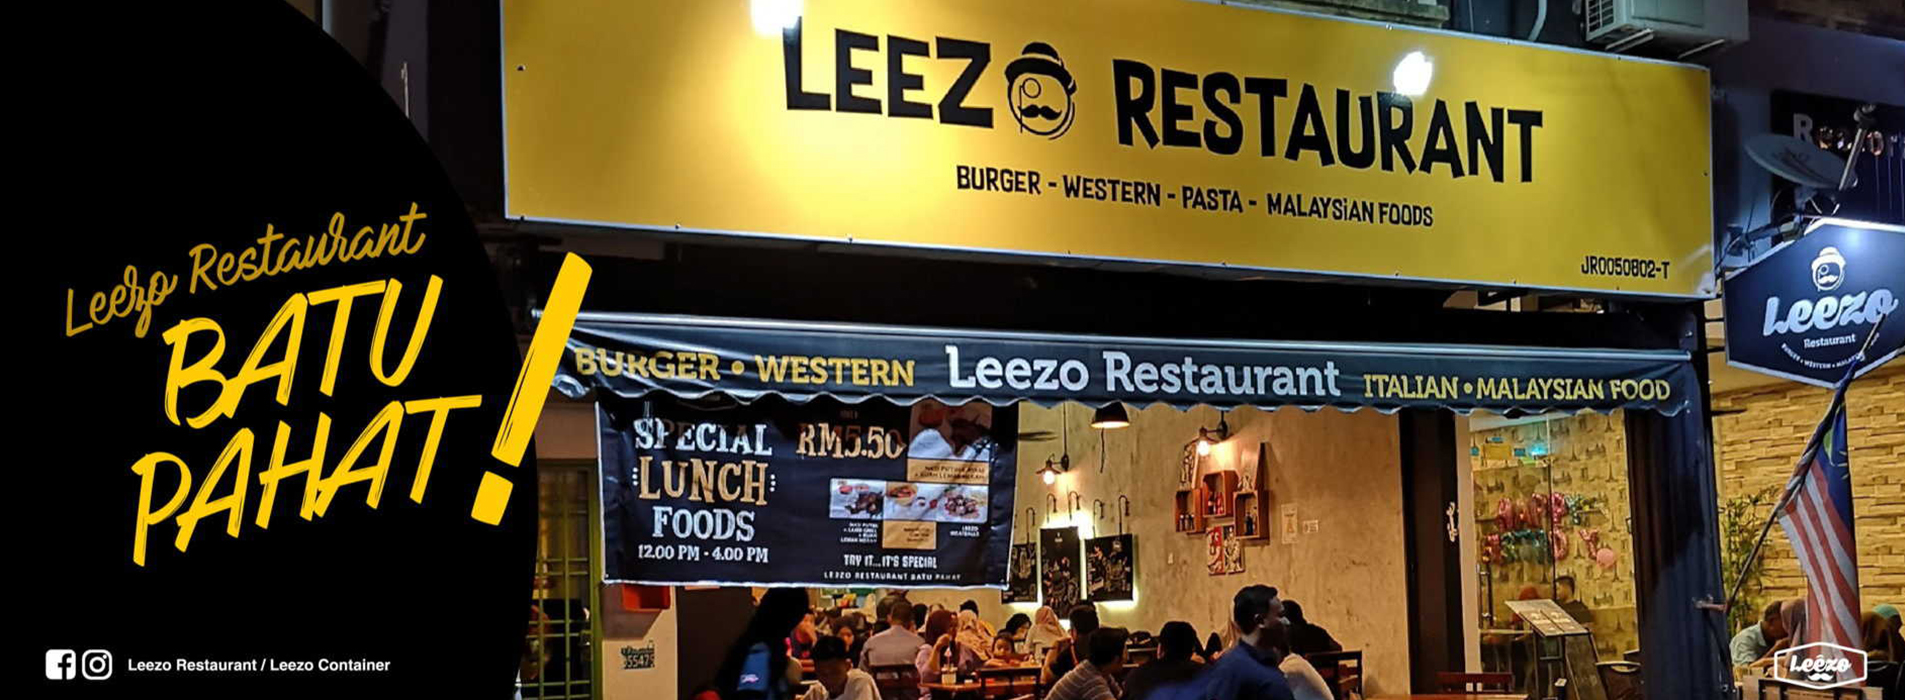 Leezo Restaurant And Container